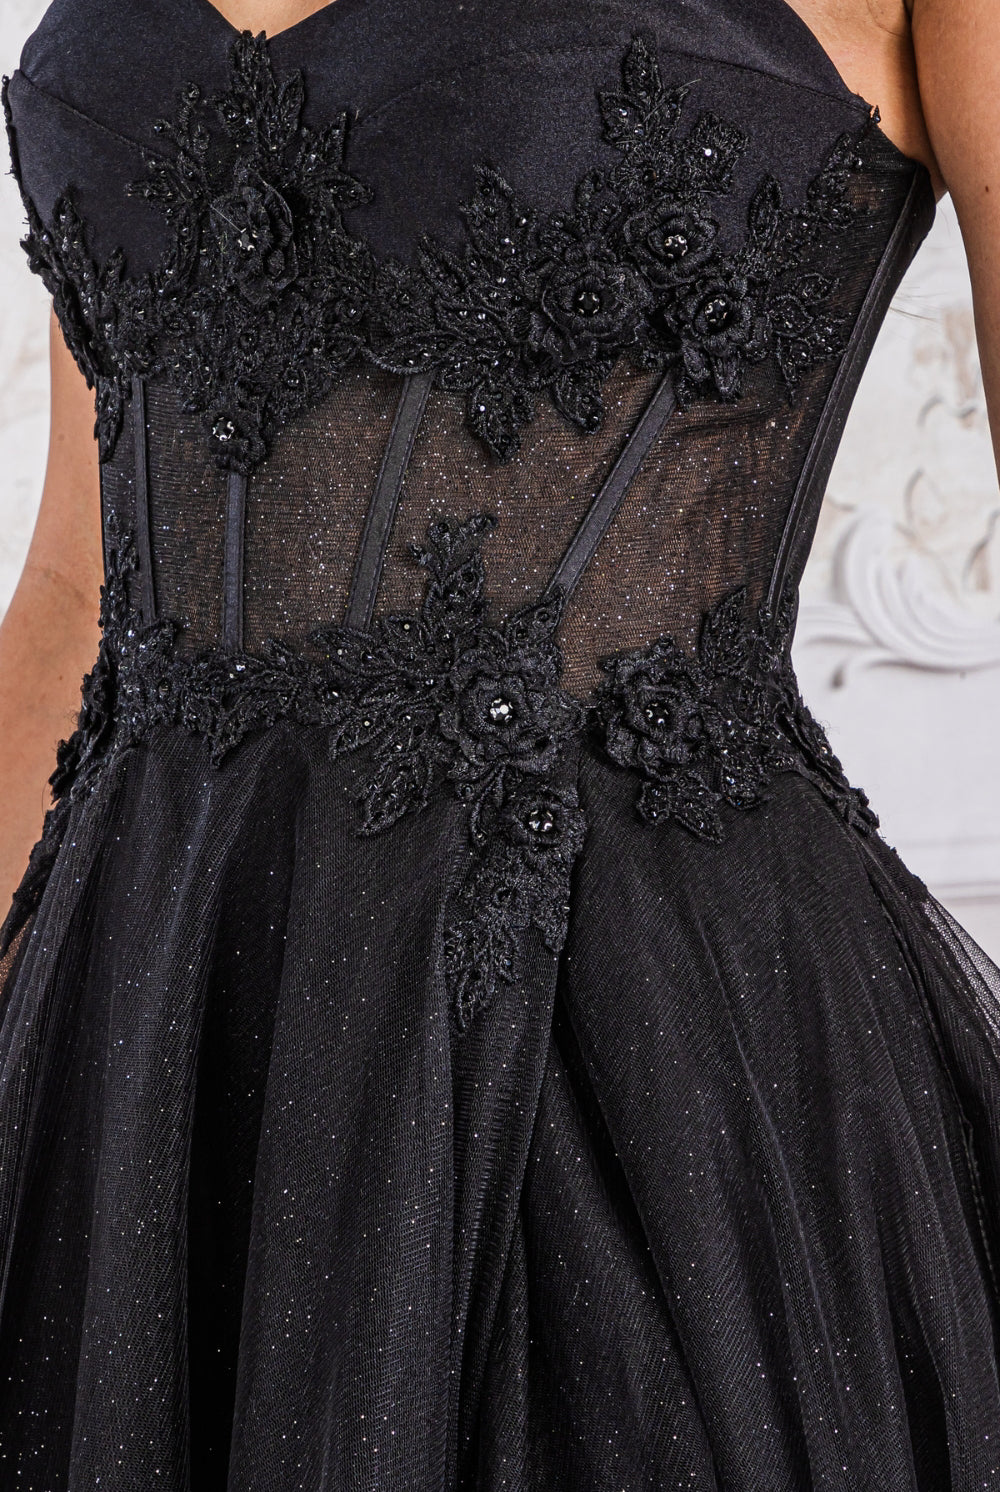 Strapless Embroidered Bodice Side SlitTulle Skirt Long Prom Dress AC7042-Prom Dress-smcfashion.com